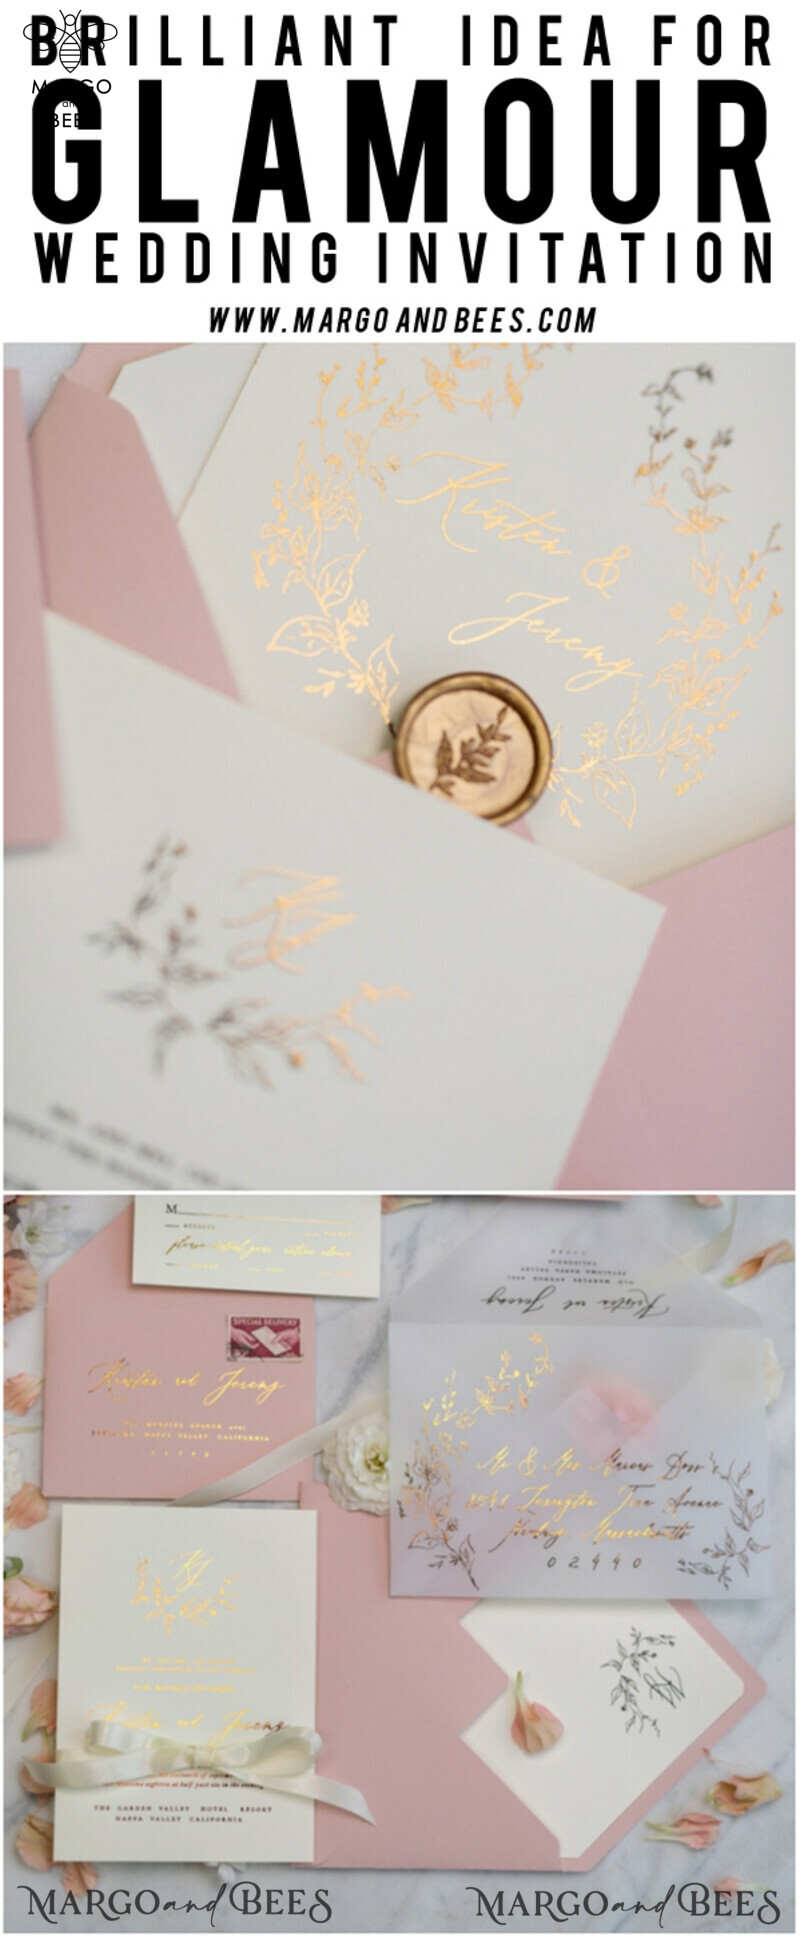 Bespoke Vellum Wedding Invitation Suite: Romantic Blush Pink and Glamour Gold Foil for an Elegant Golden Wedding-36